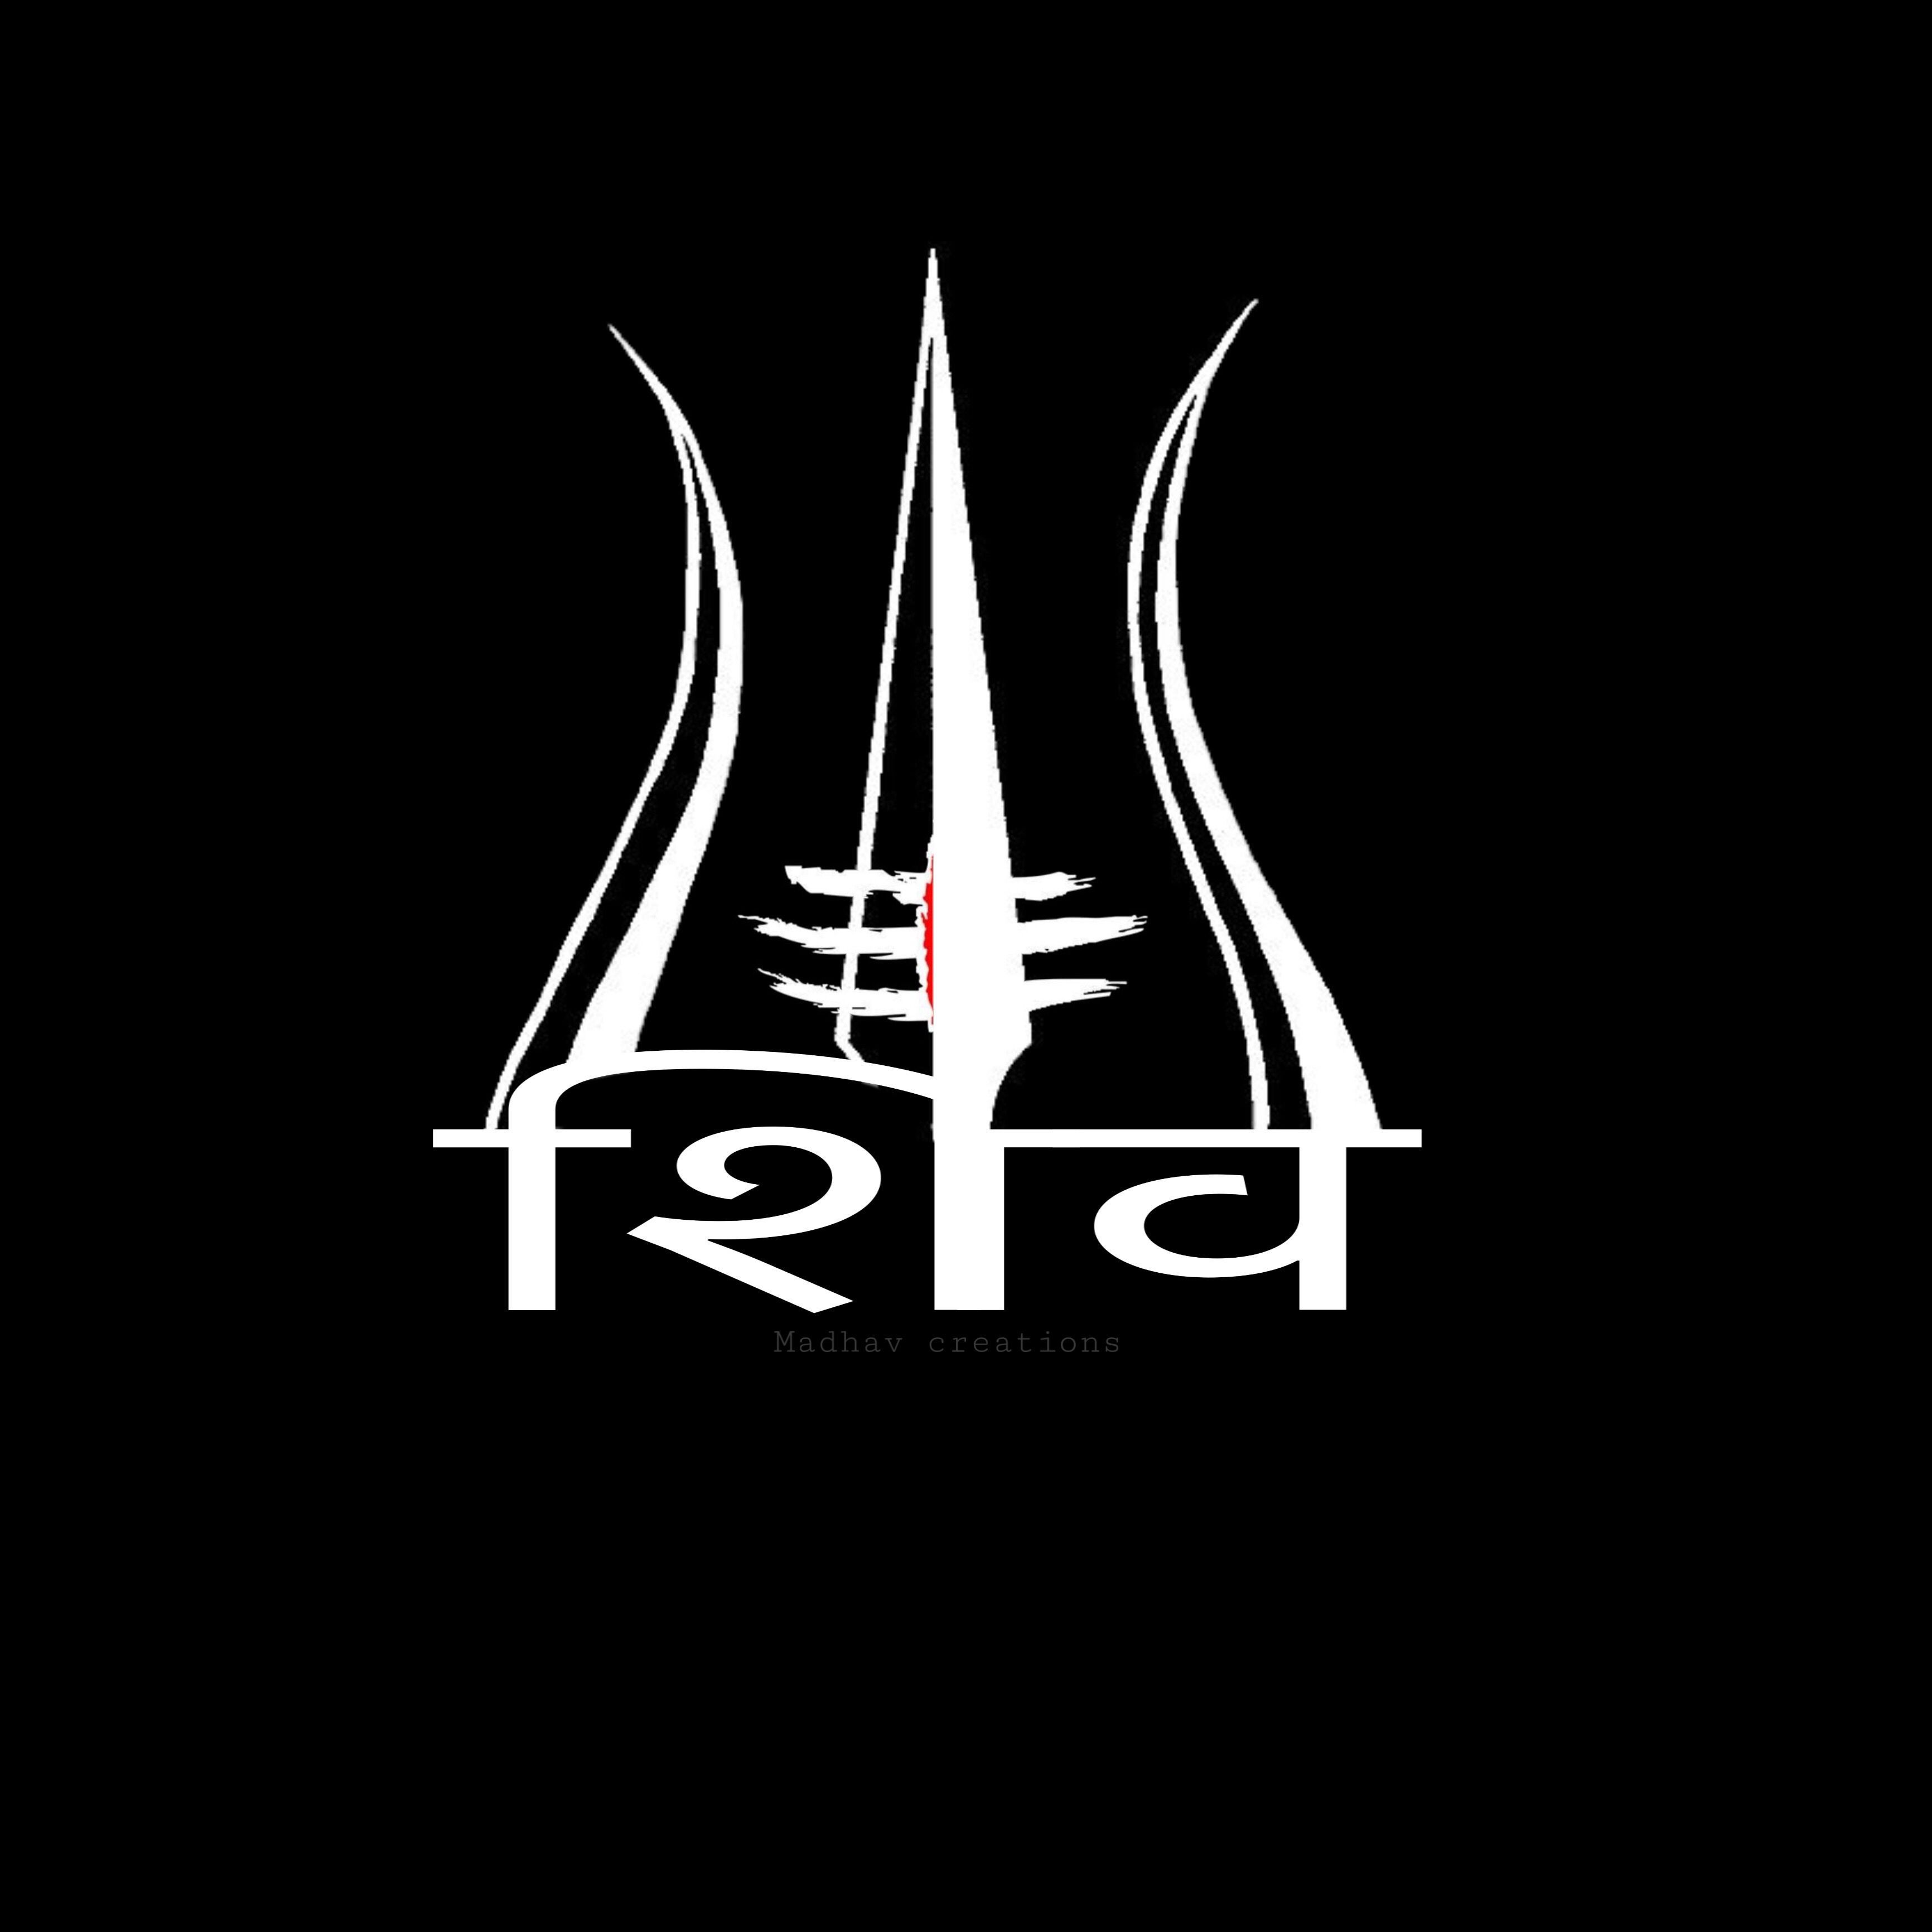 Trident Neptune God Poseidon Triton King Shiva Spear Label logo design.  23528503 Vector Art at Vecteezy